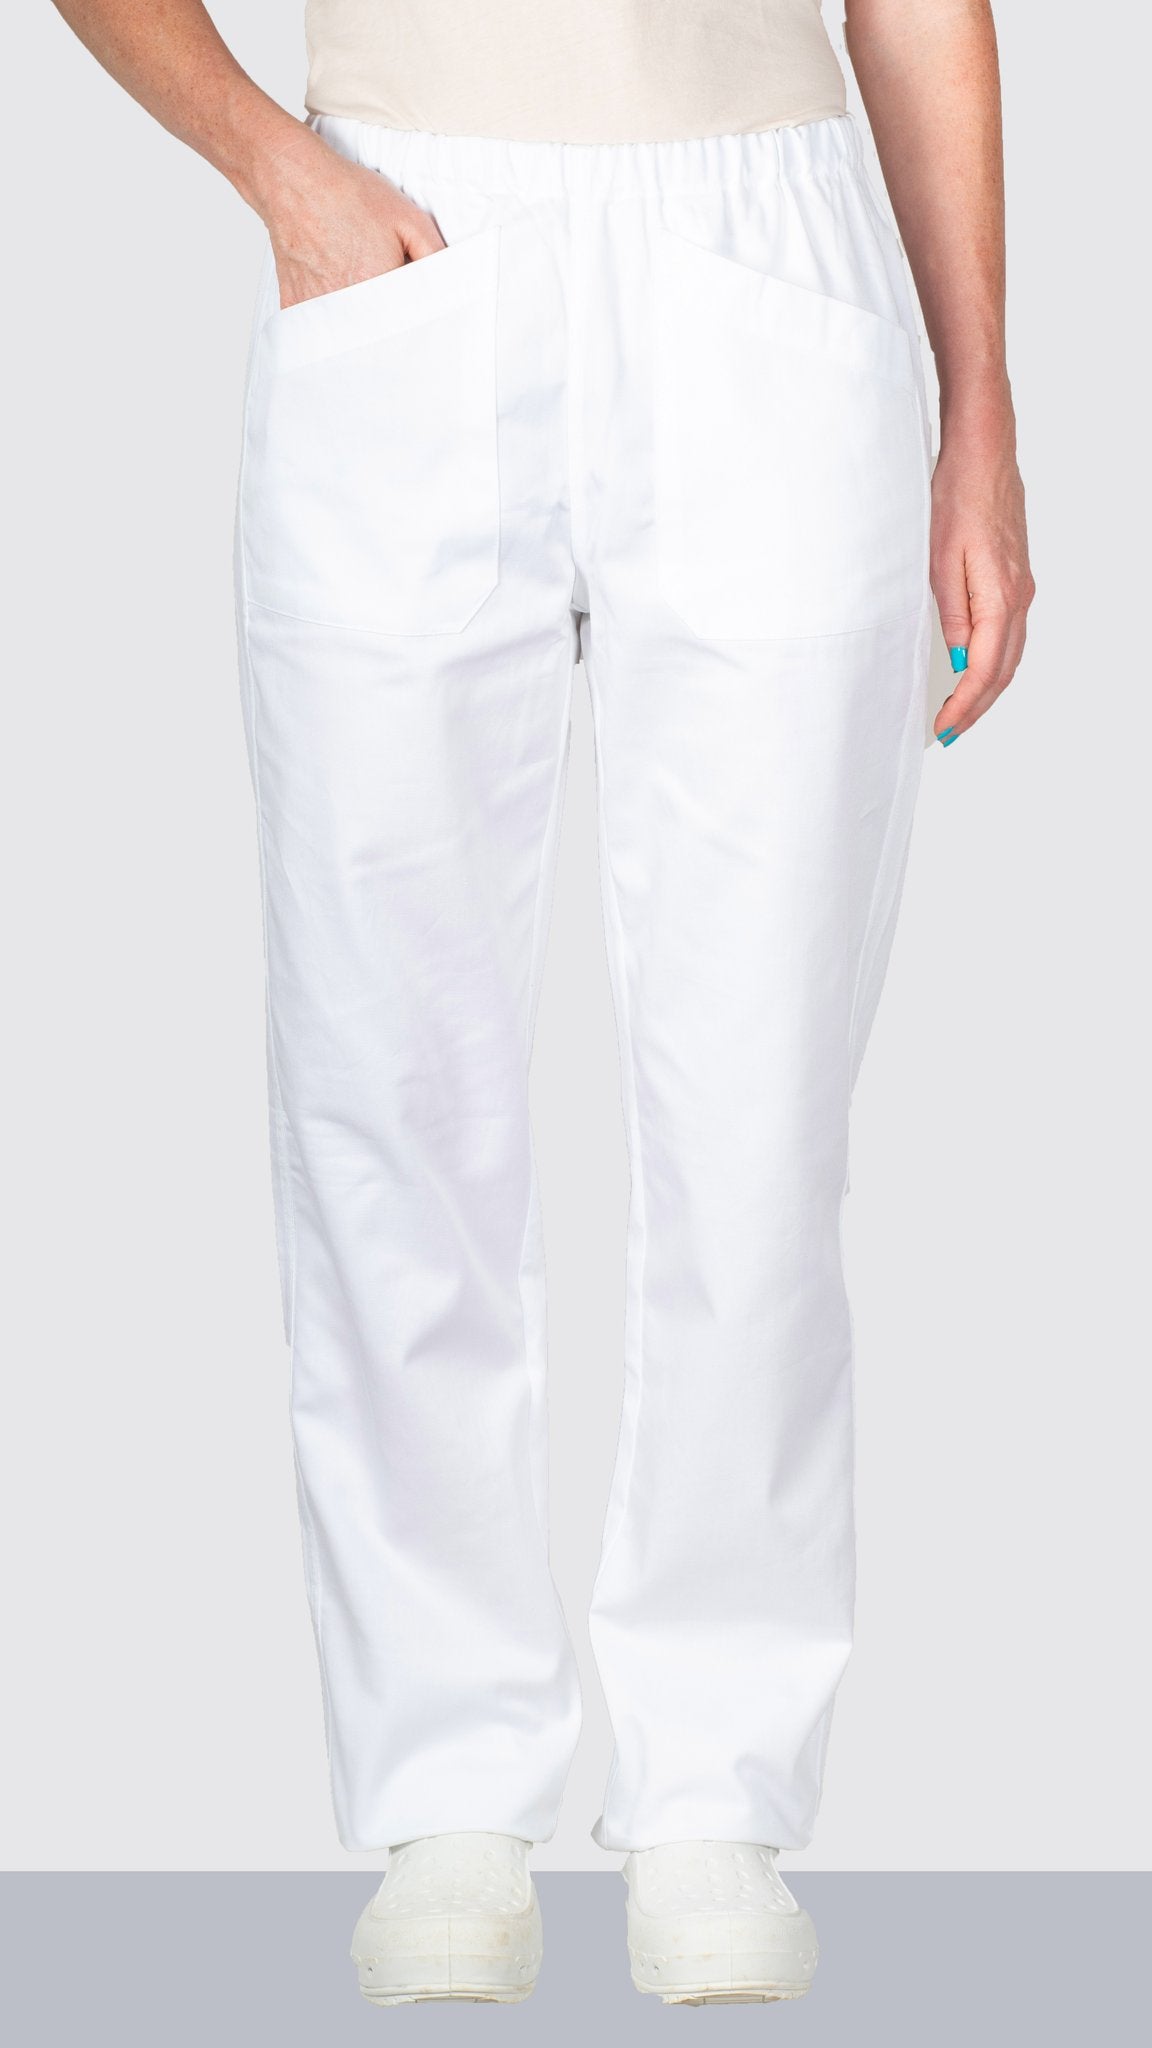 Pantaloni sanitari unisex in tessuto leggero (colori Bianco, Verde Acqua e Blu Lavanda)